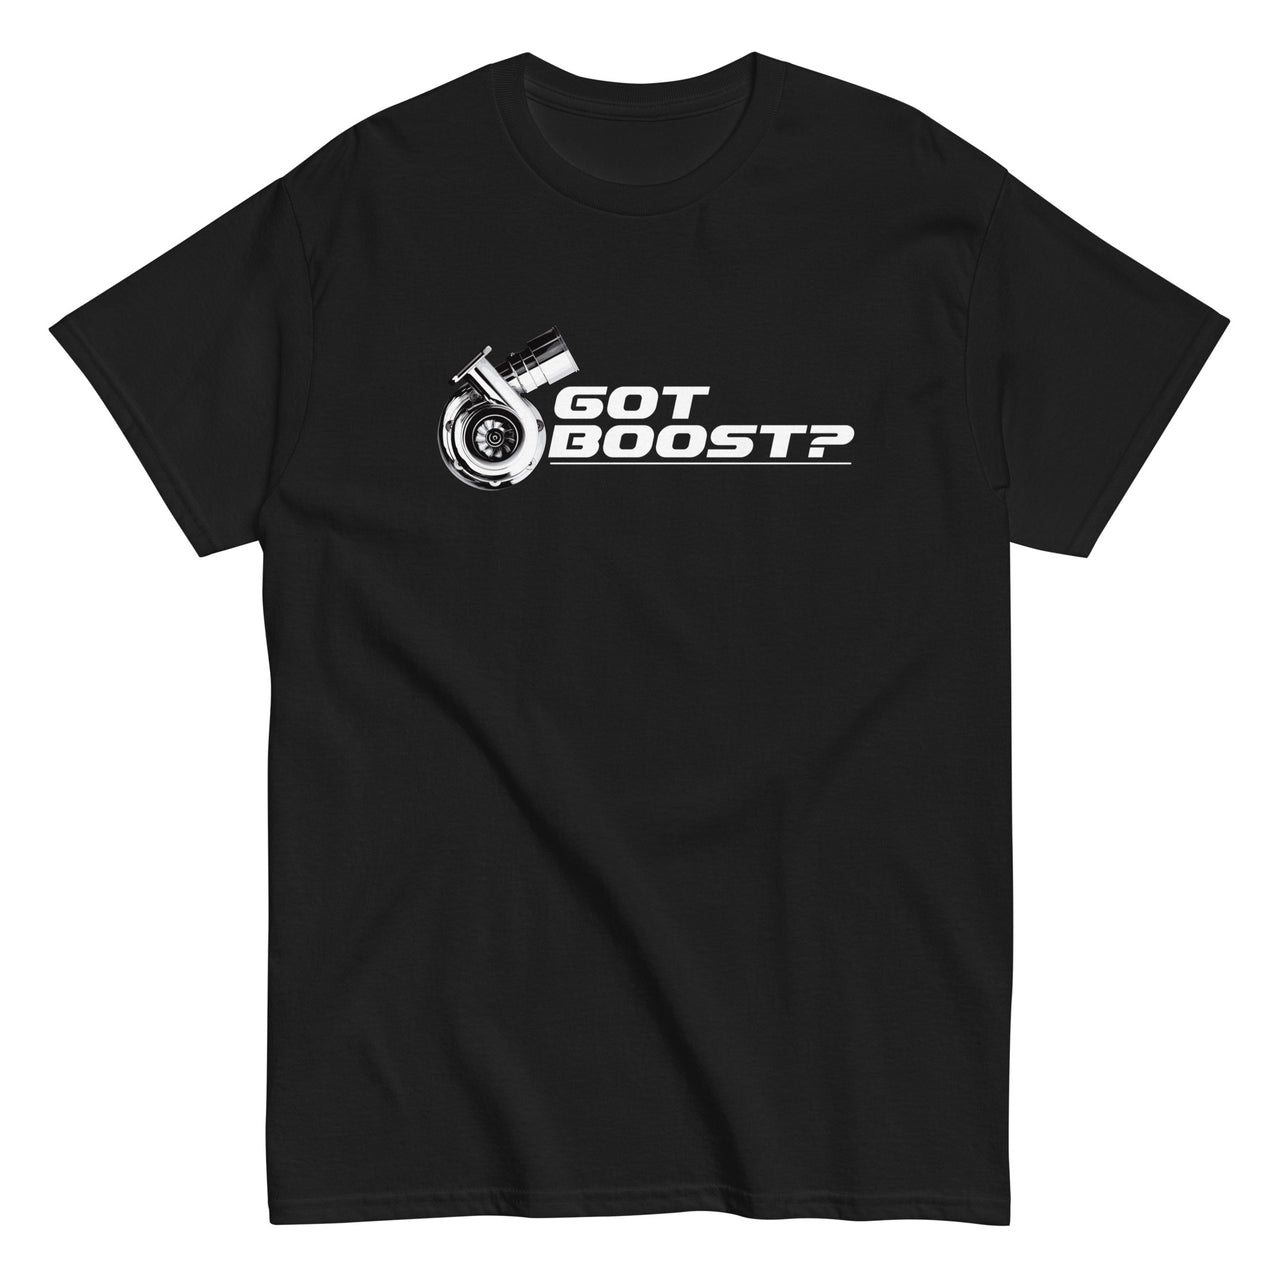 Got Boost? Funny Car Guy Turbo T-Shirt in black